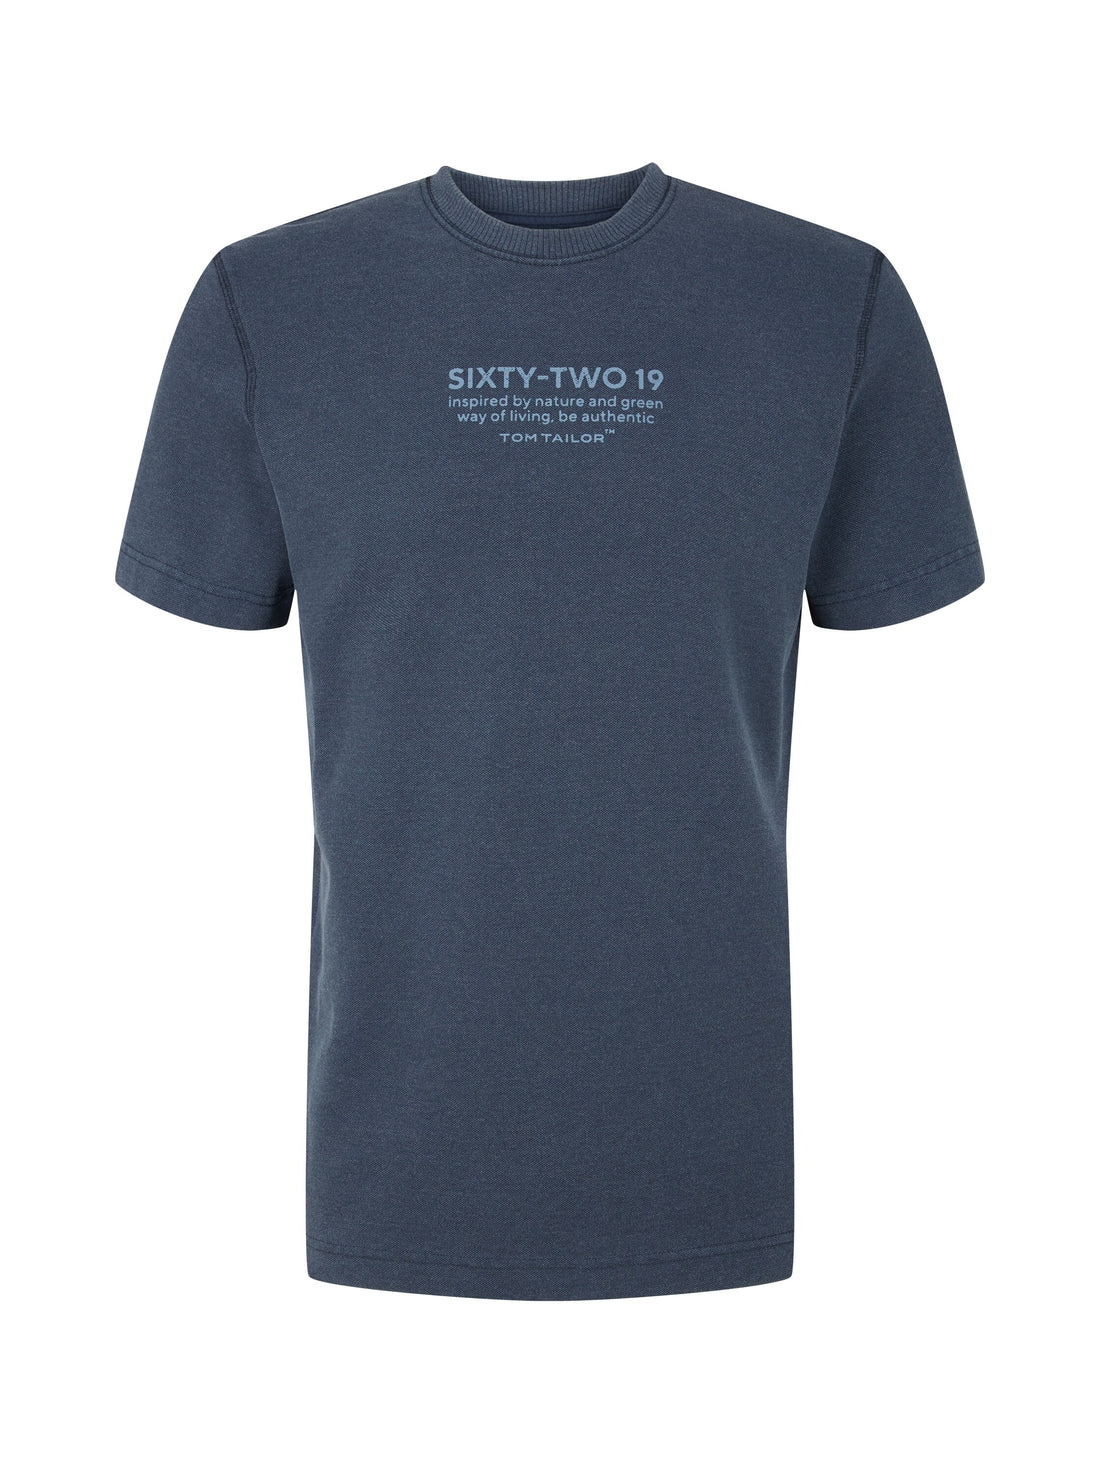 Navy Blue Short Sleeve Round Neck Graphic T-Shirt